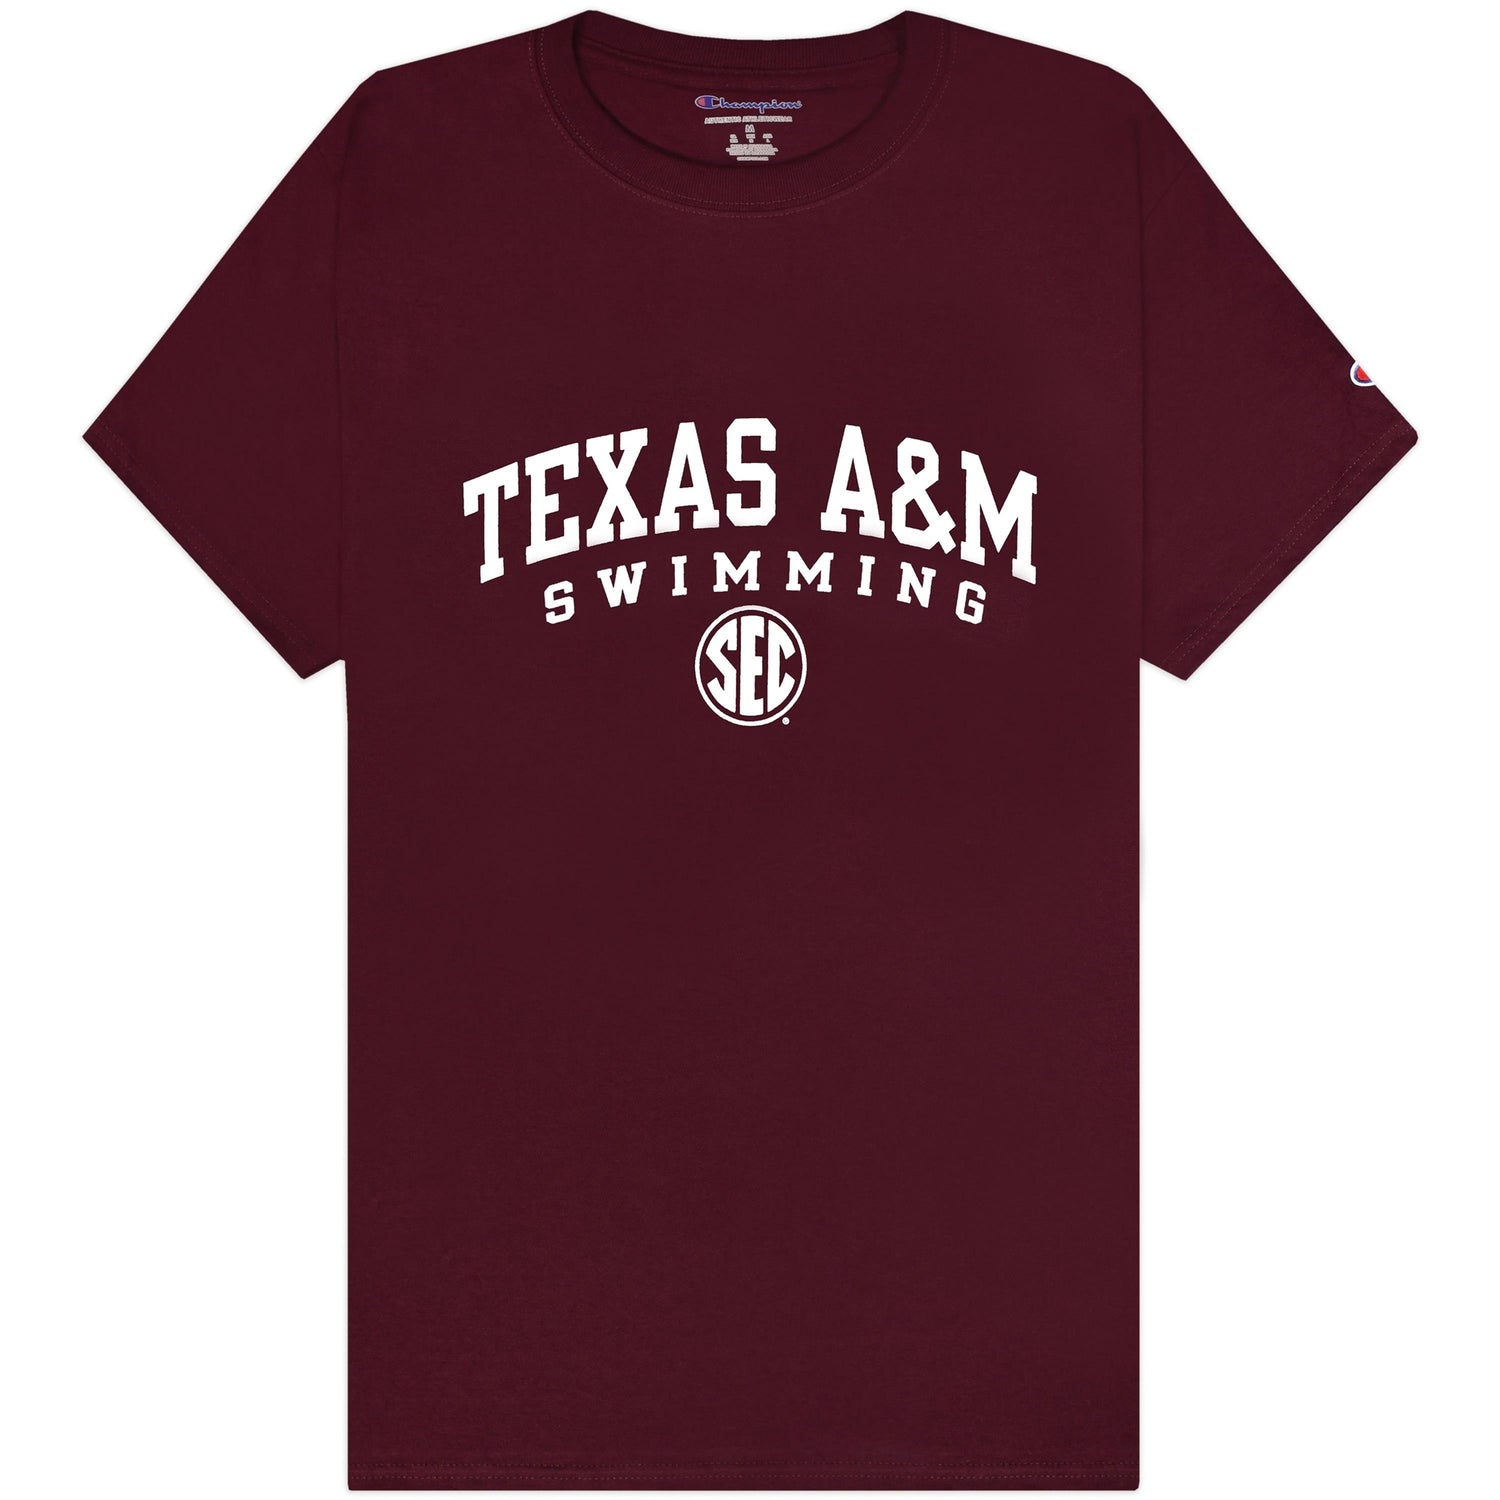 Texas A&M Champion Swimming SEC T-Shirt